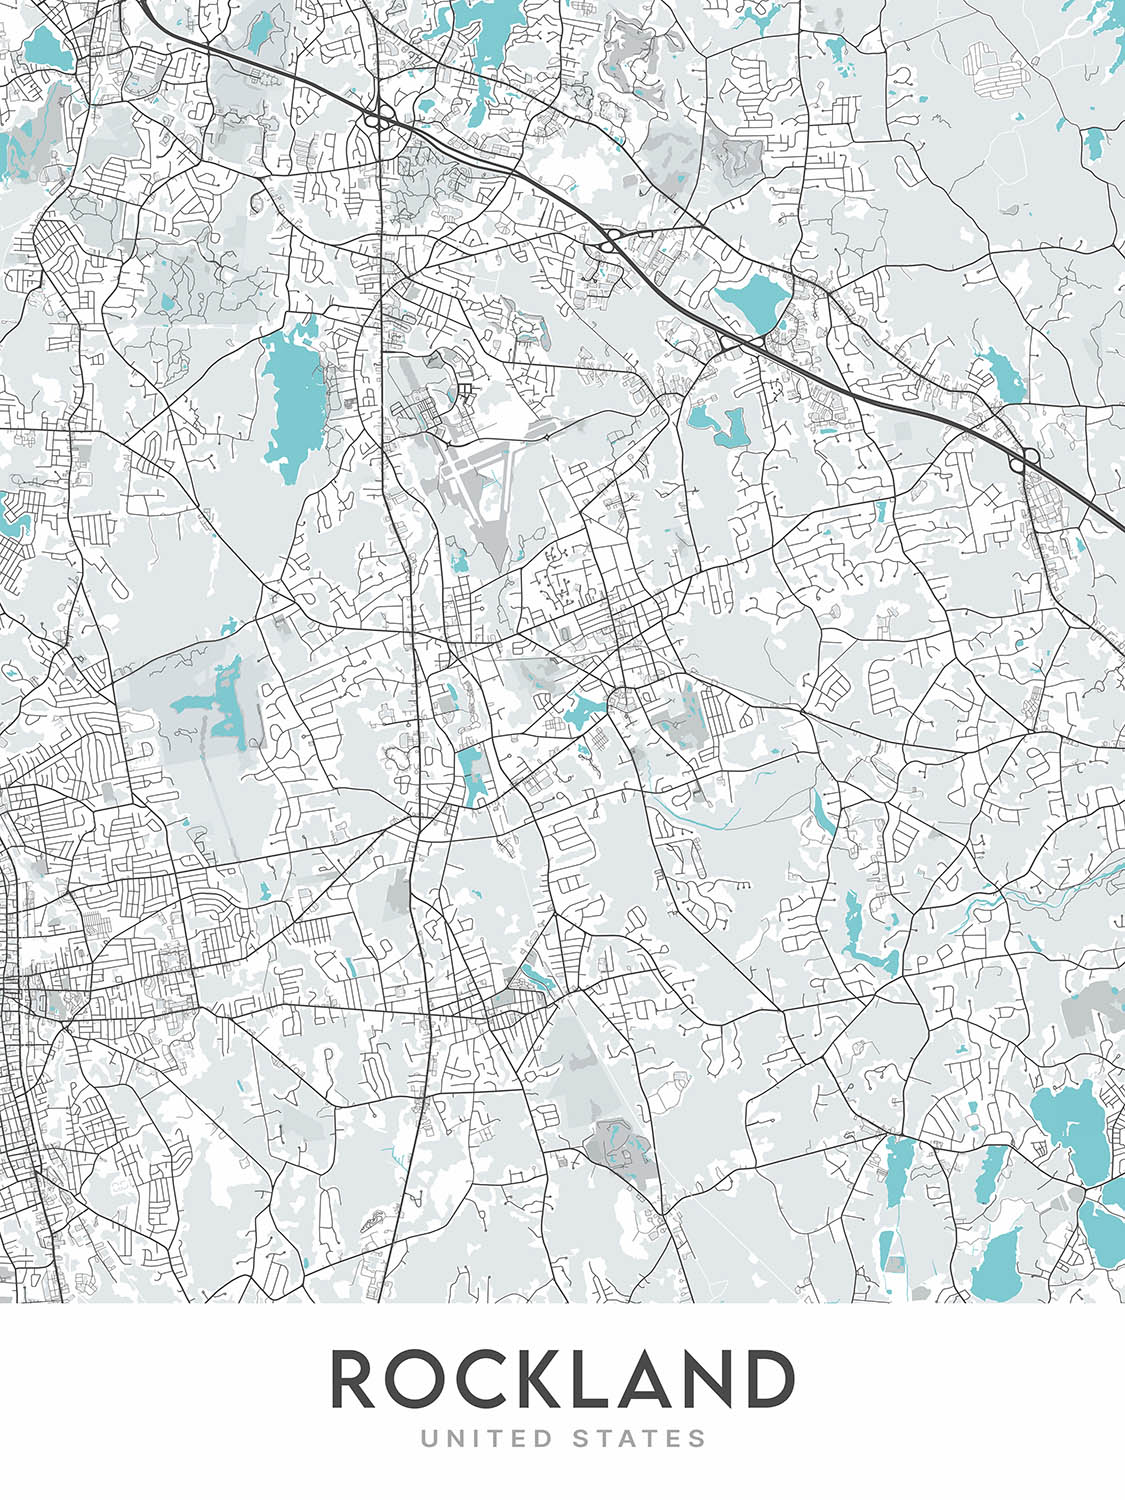 Modern City Map of Rockland, MA: Hanover, Union Street, Summer Street, Liberty Street, Reed Street